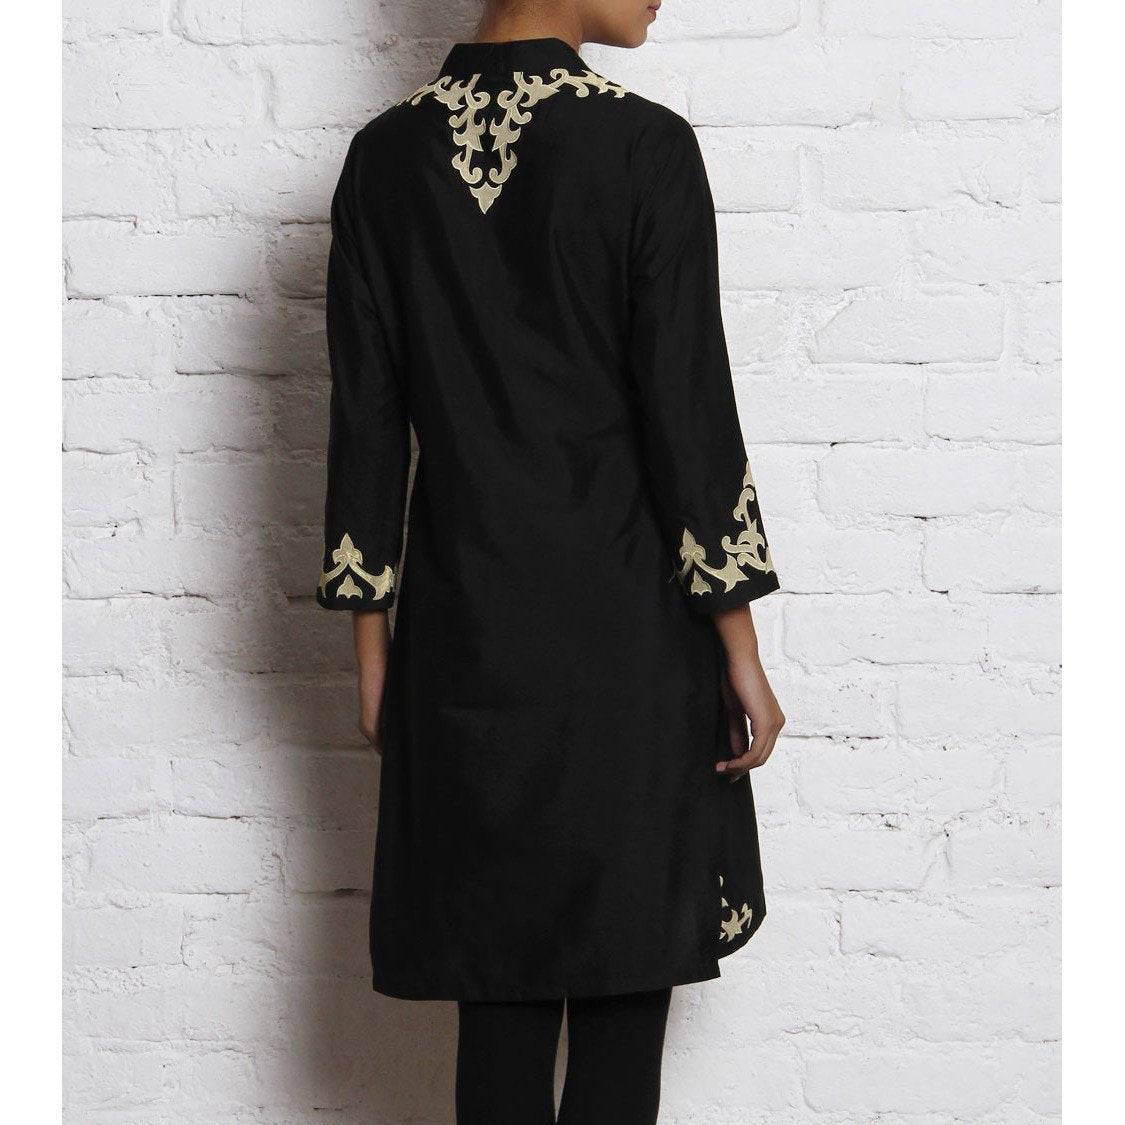 Black Embroidered Katan Silk Kurti